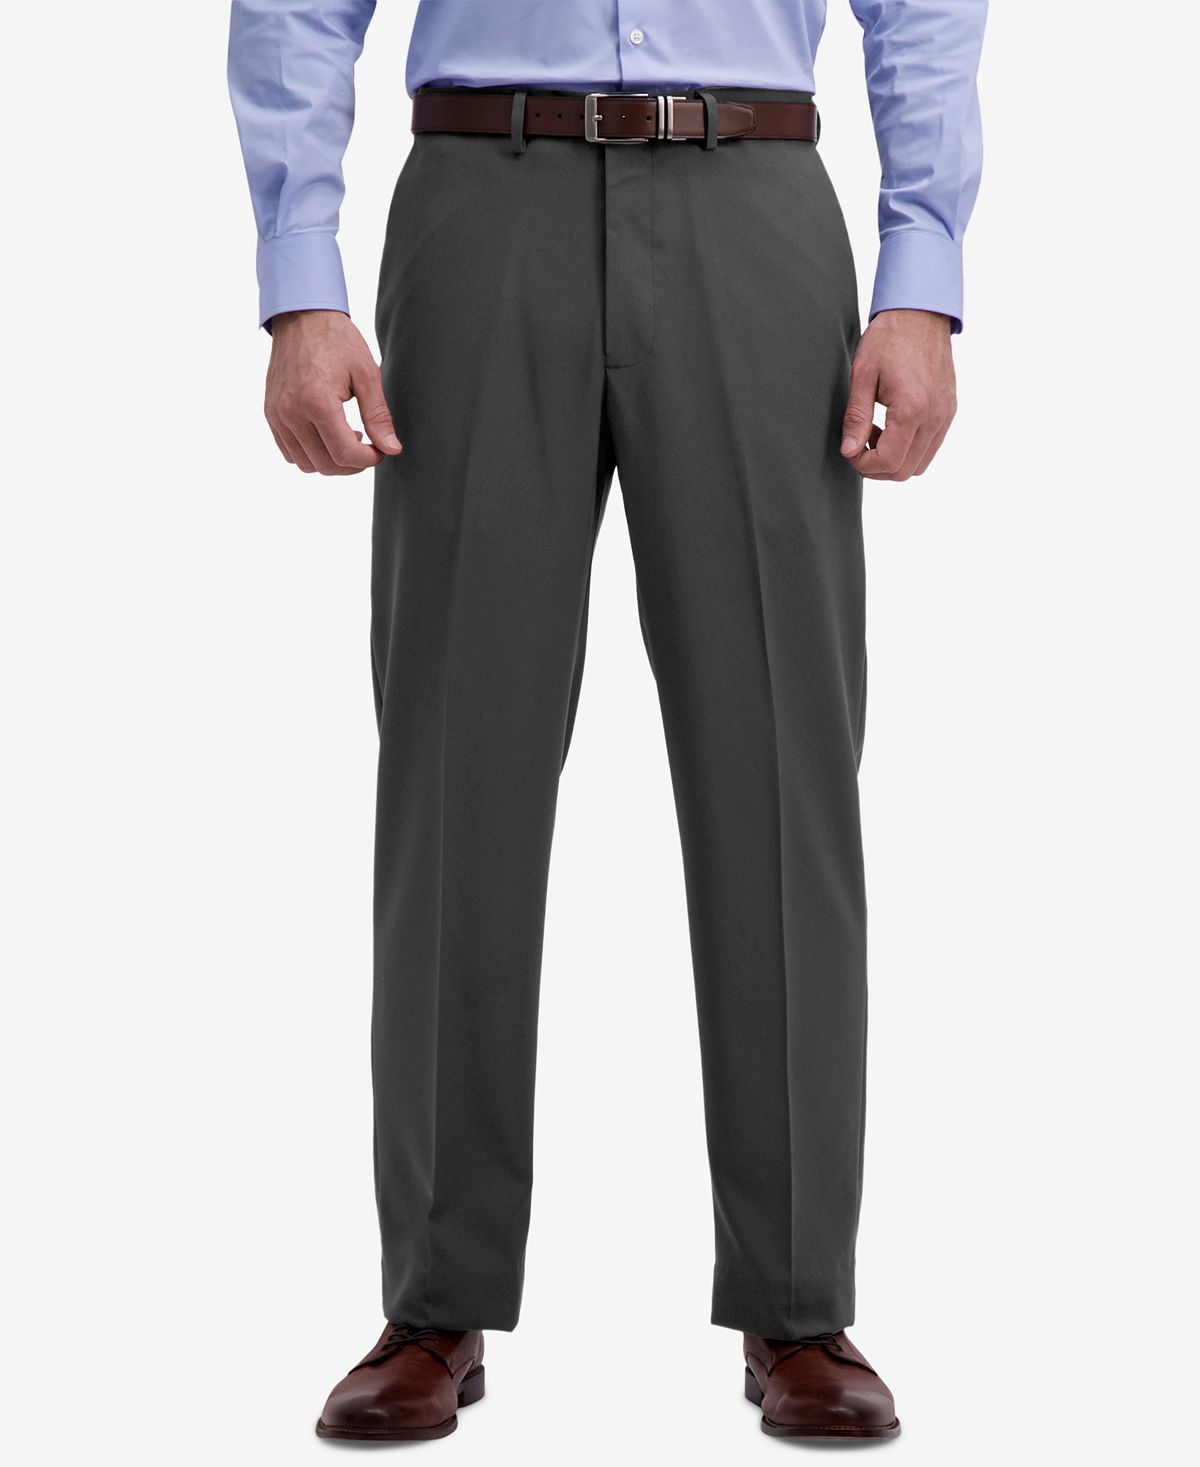 Haggar Microfiber Performance Classic-fit Dress Pants Grey